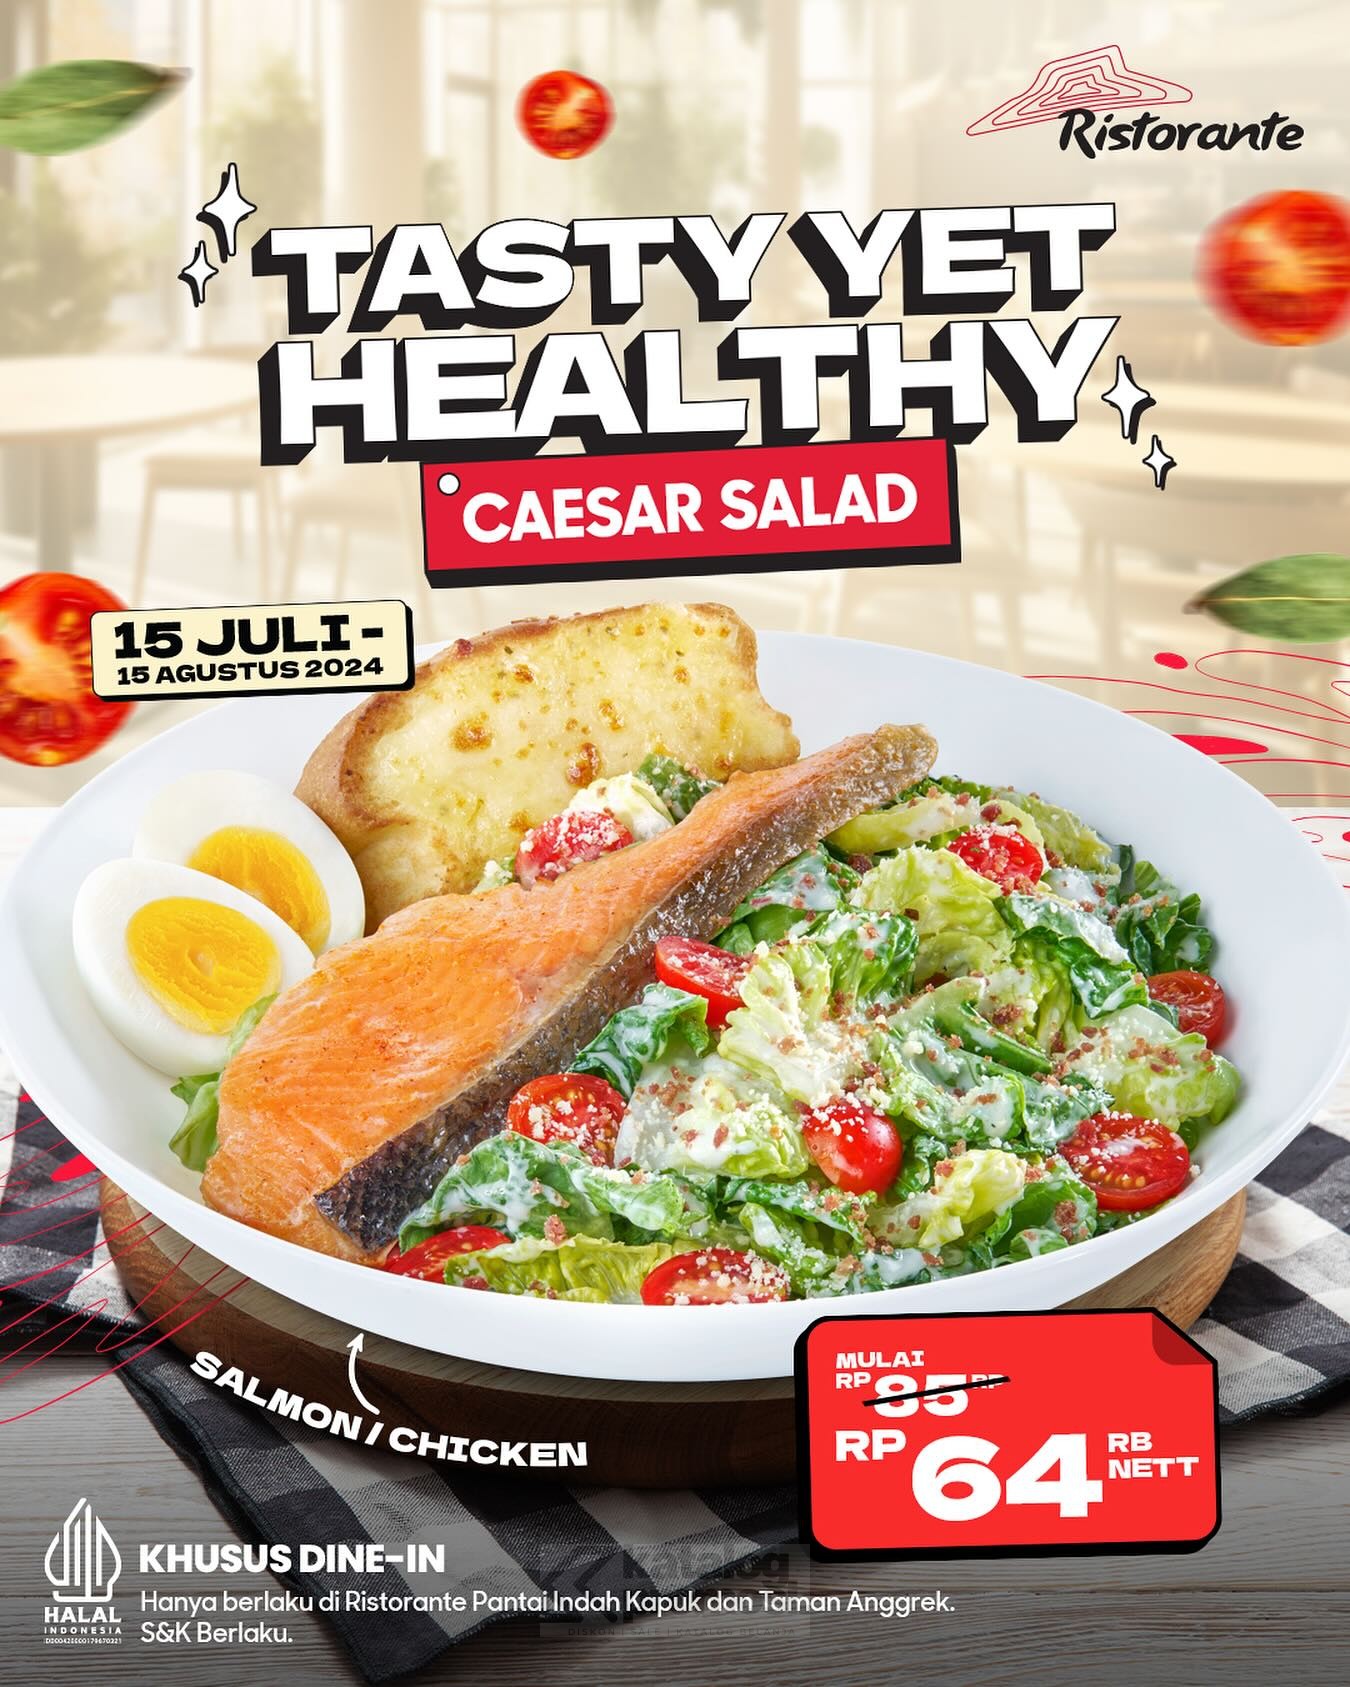 PROMO PIZZA HUT SPECIAL PRICE Caesar Salad Salmon/Chicken cuma Rp. 64.000 berlaku mulai tanggal 15 Juli-15 Agustus 2024